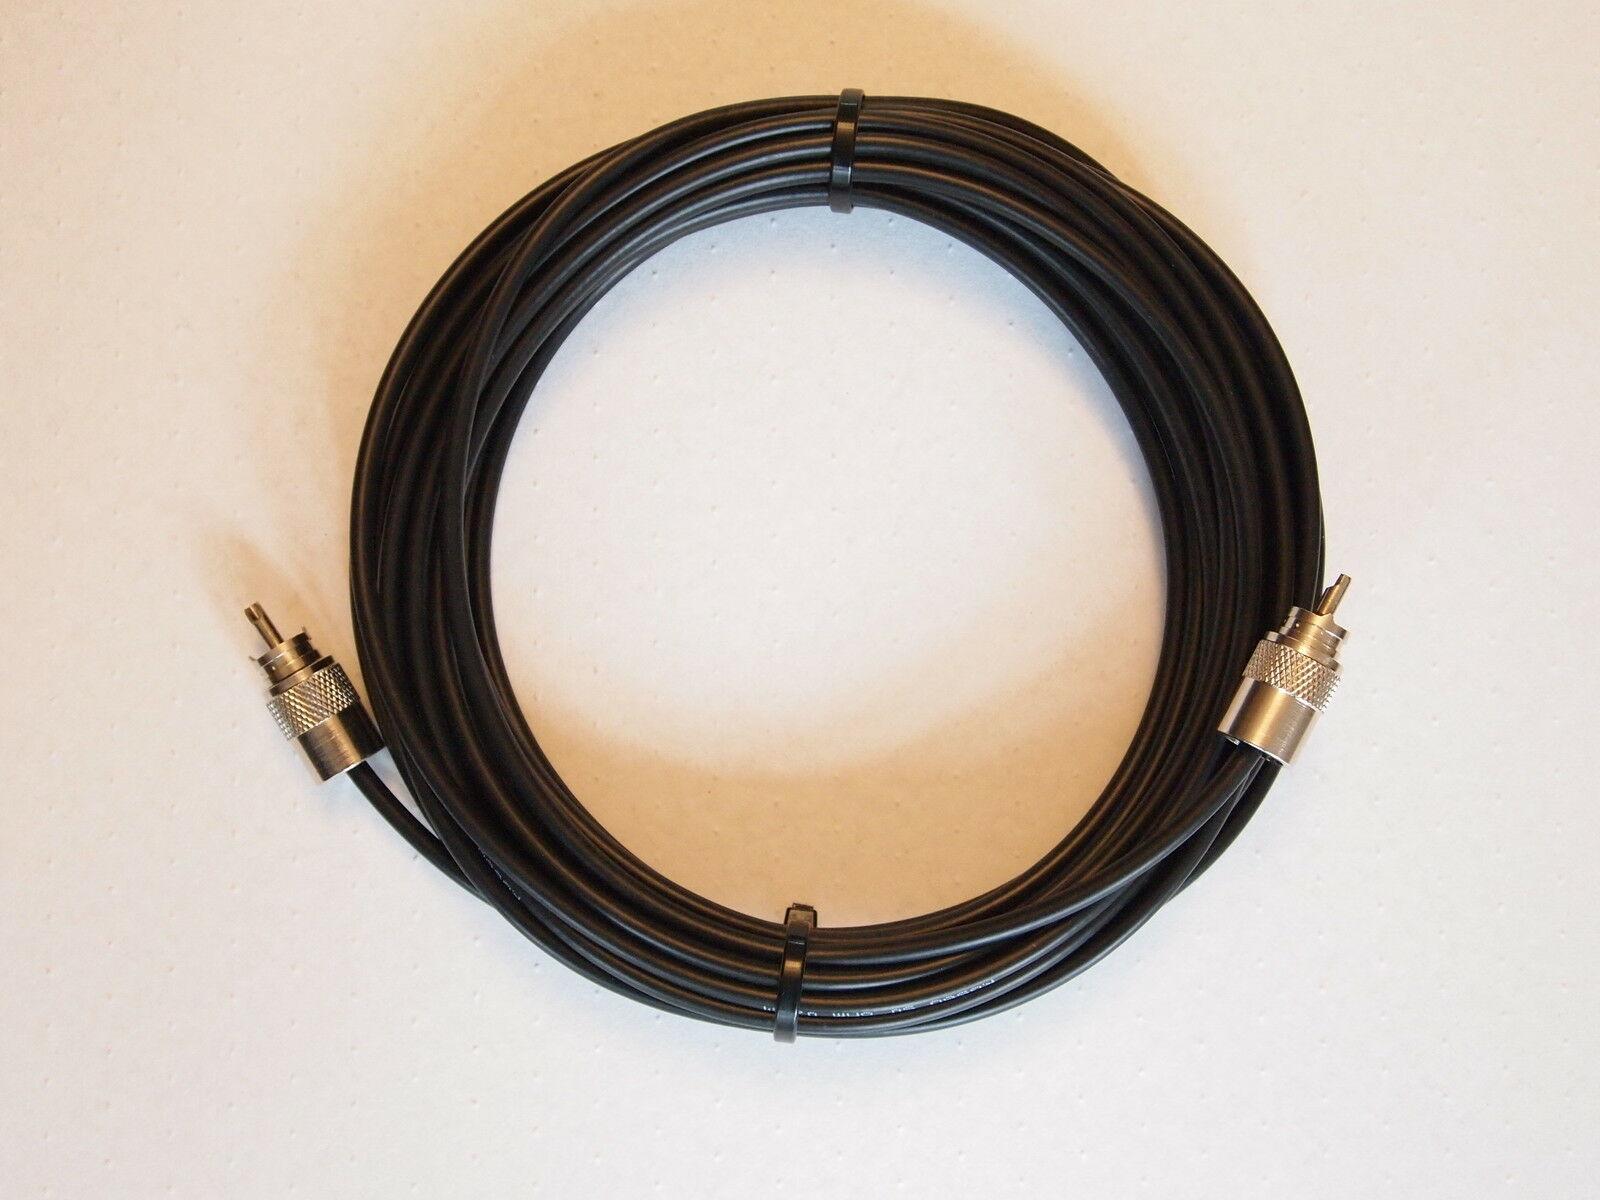 Sigma RG-58 Military Spec Coax cable 5 Metre Lead 2 x PL259 Male Connectors